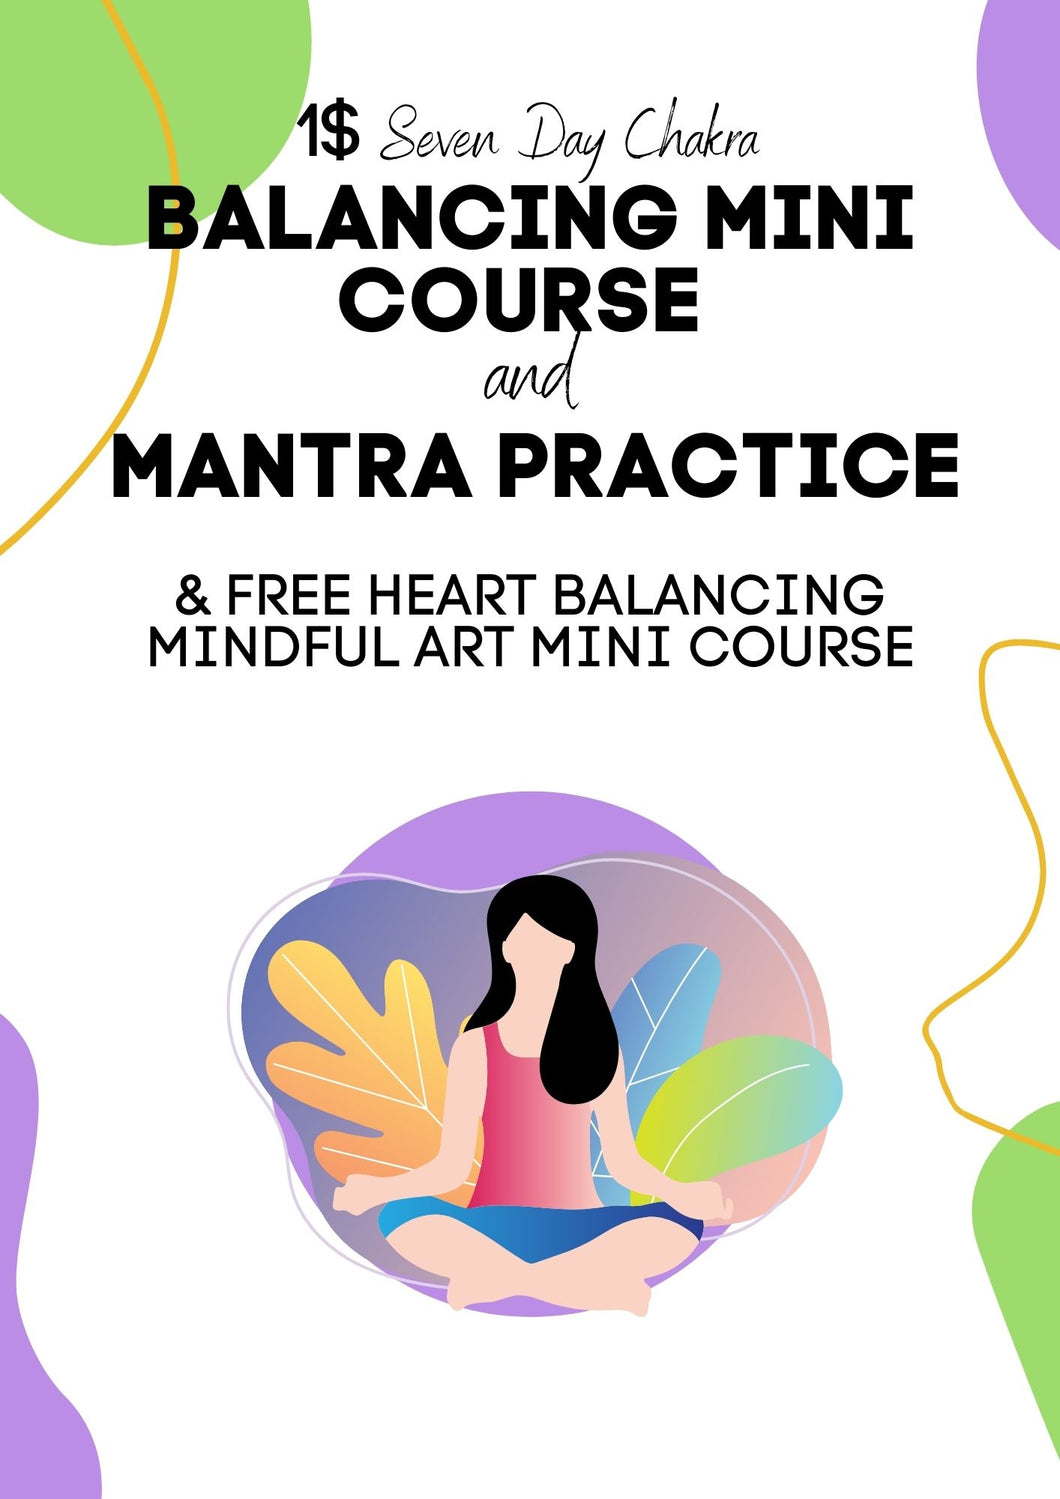 $1 Membership and Live Heart Balancing Mindful Art Workshop